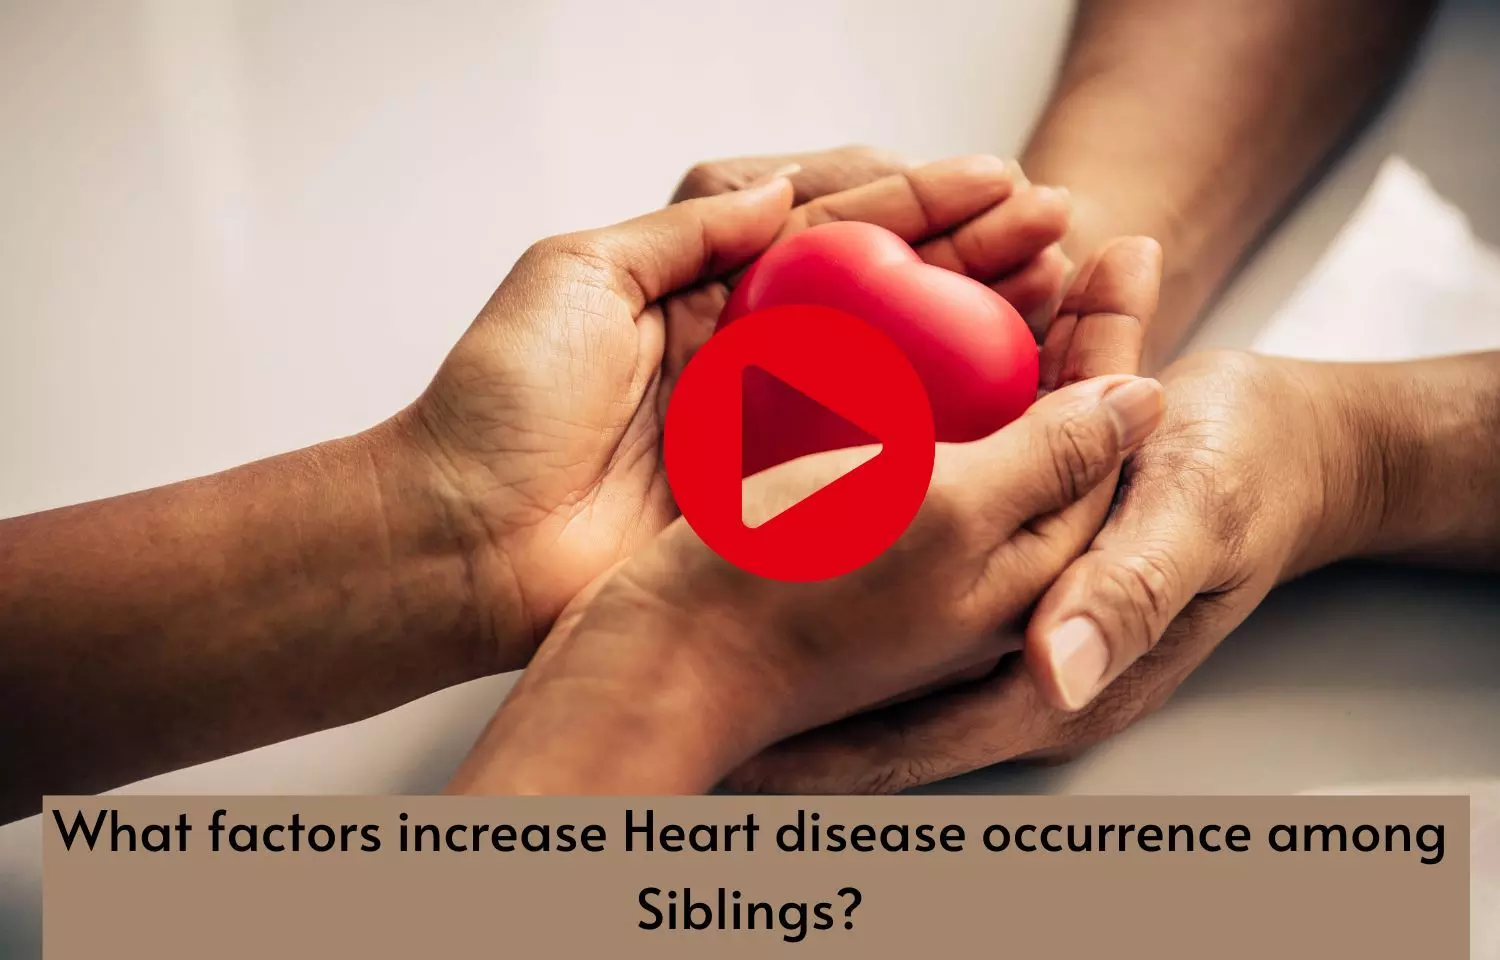 What factors increase Heart disease occurrence among Siblings?